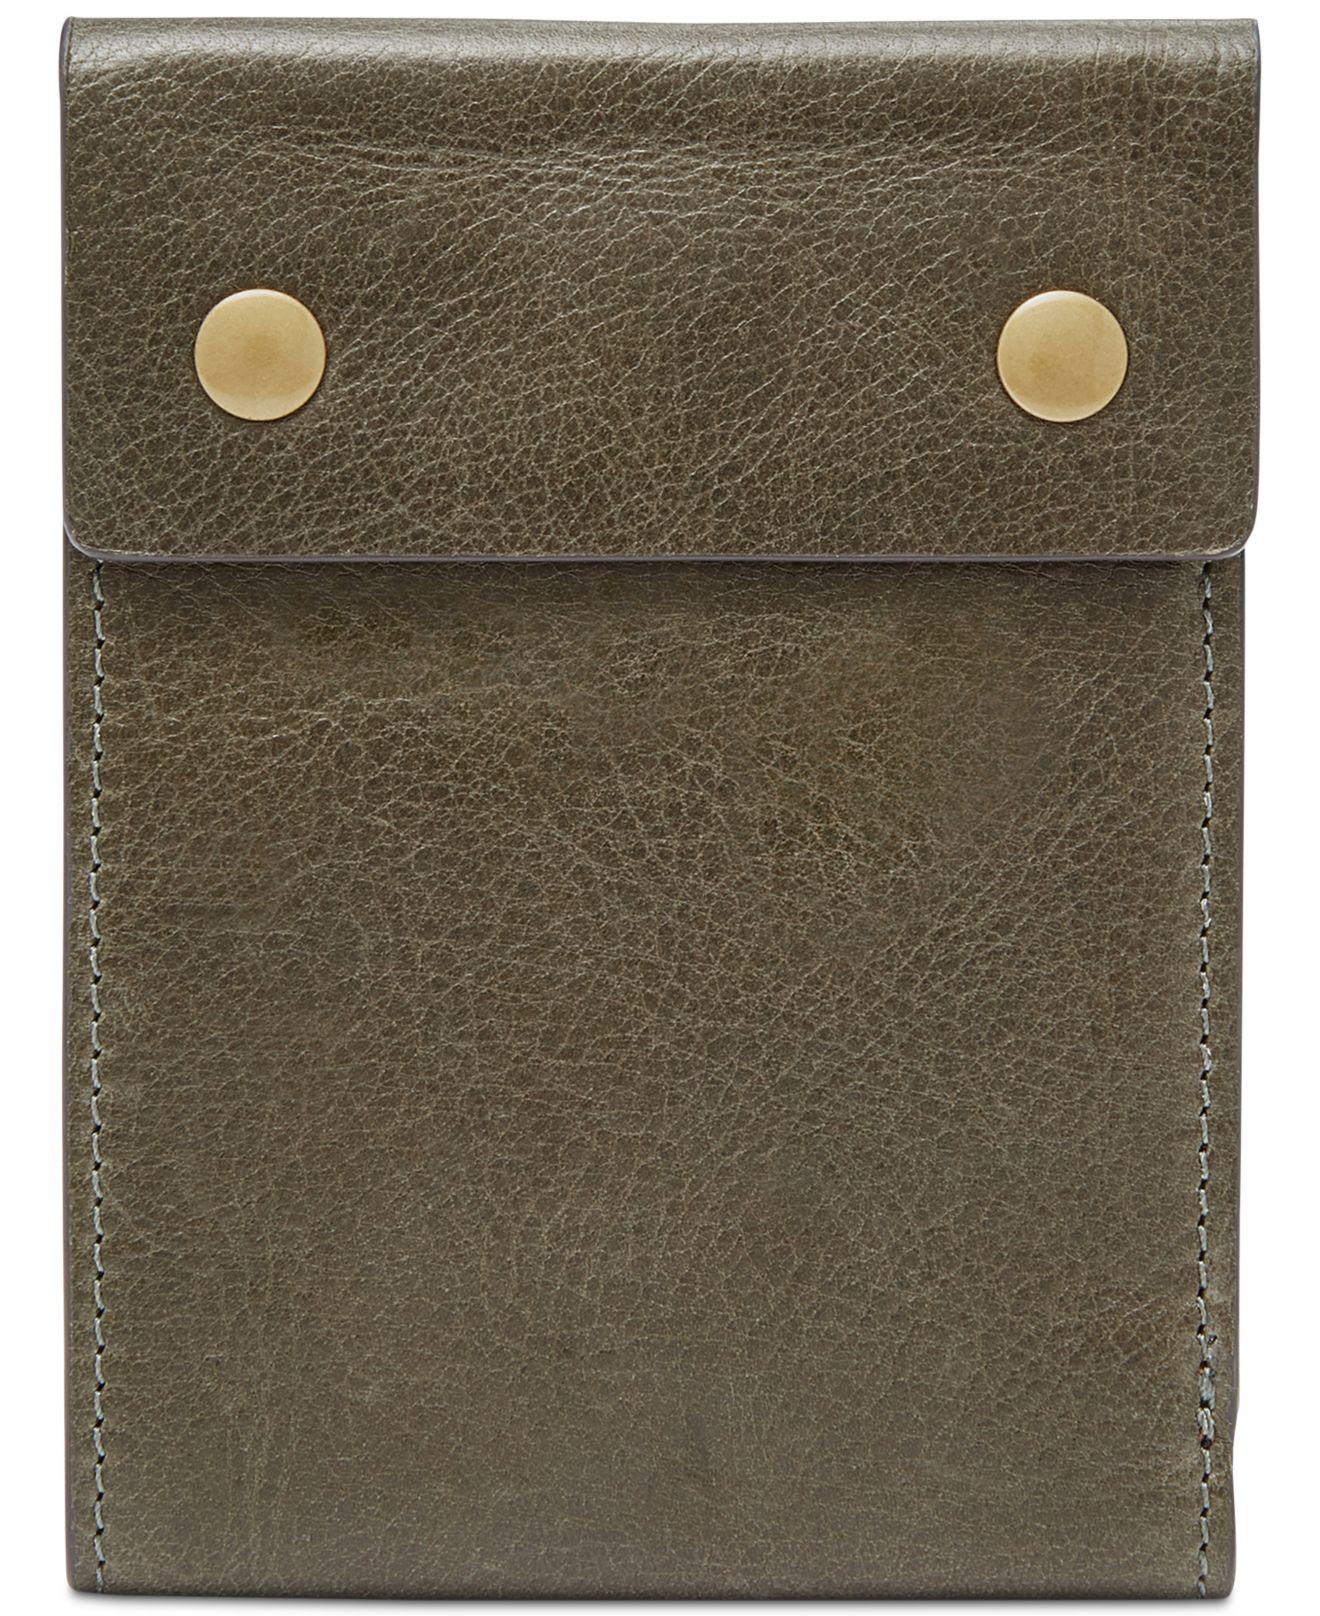 Fossil Men's Allen Leather Front Pocket Money Clip Bifold - Green - Small/Medium